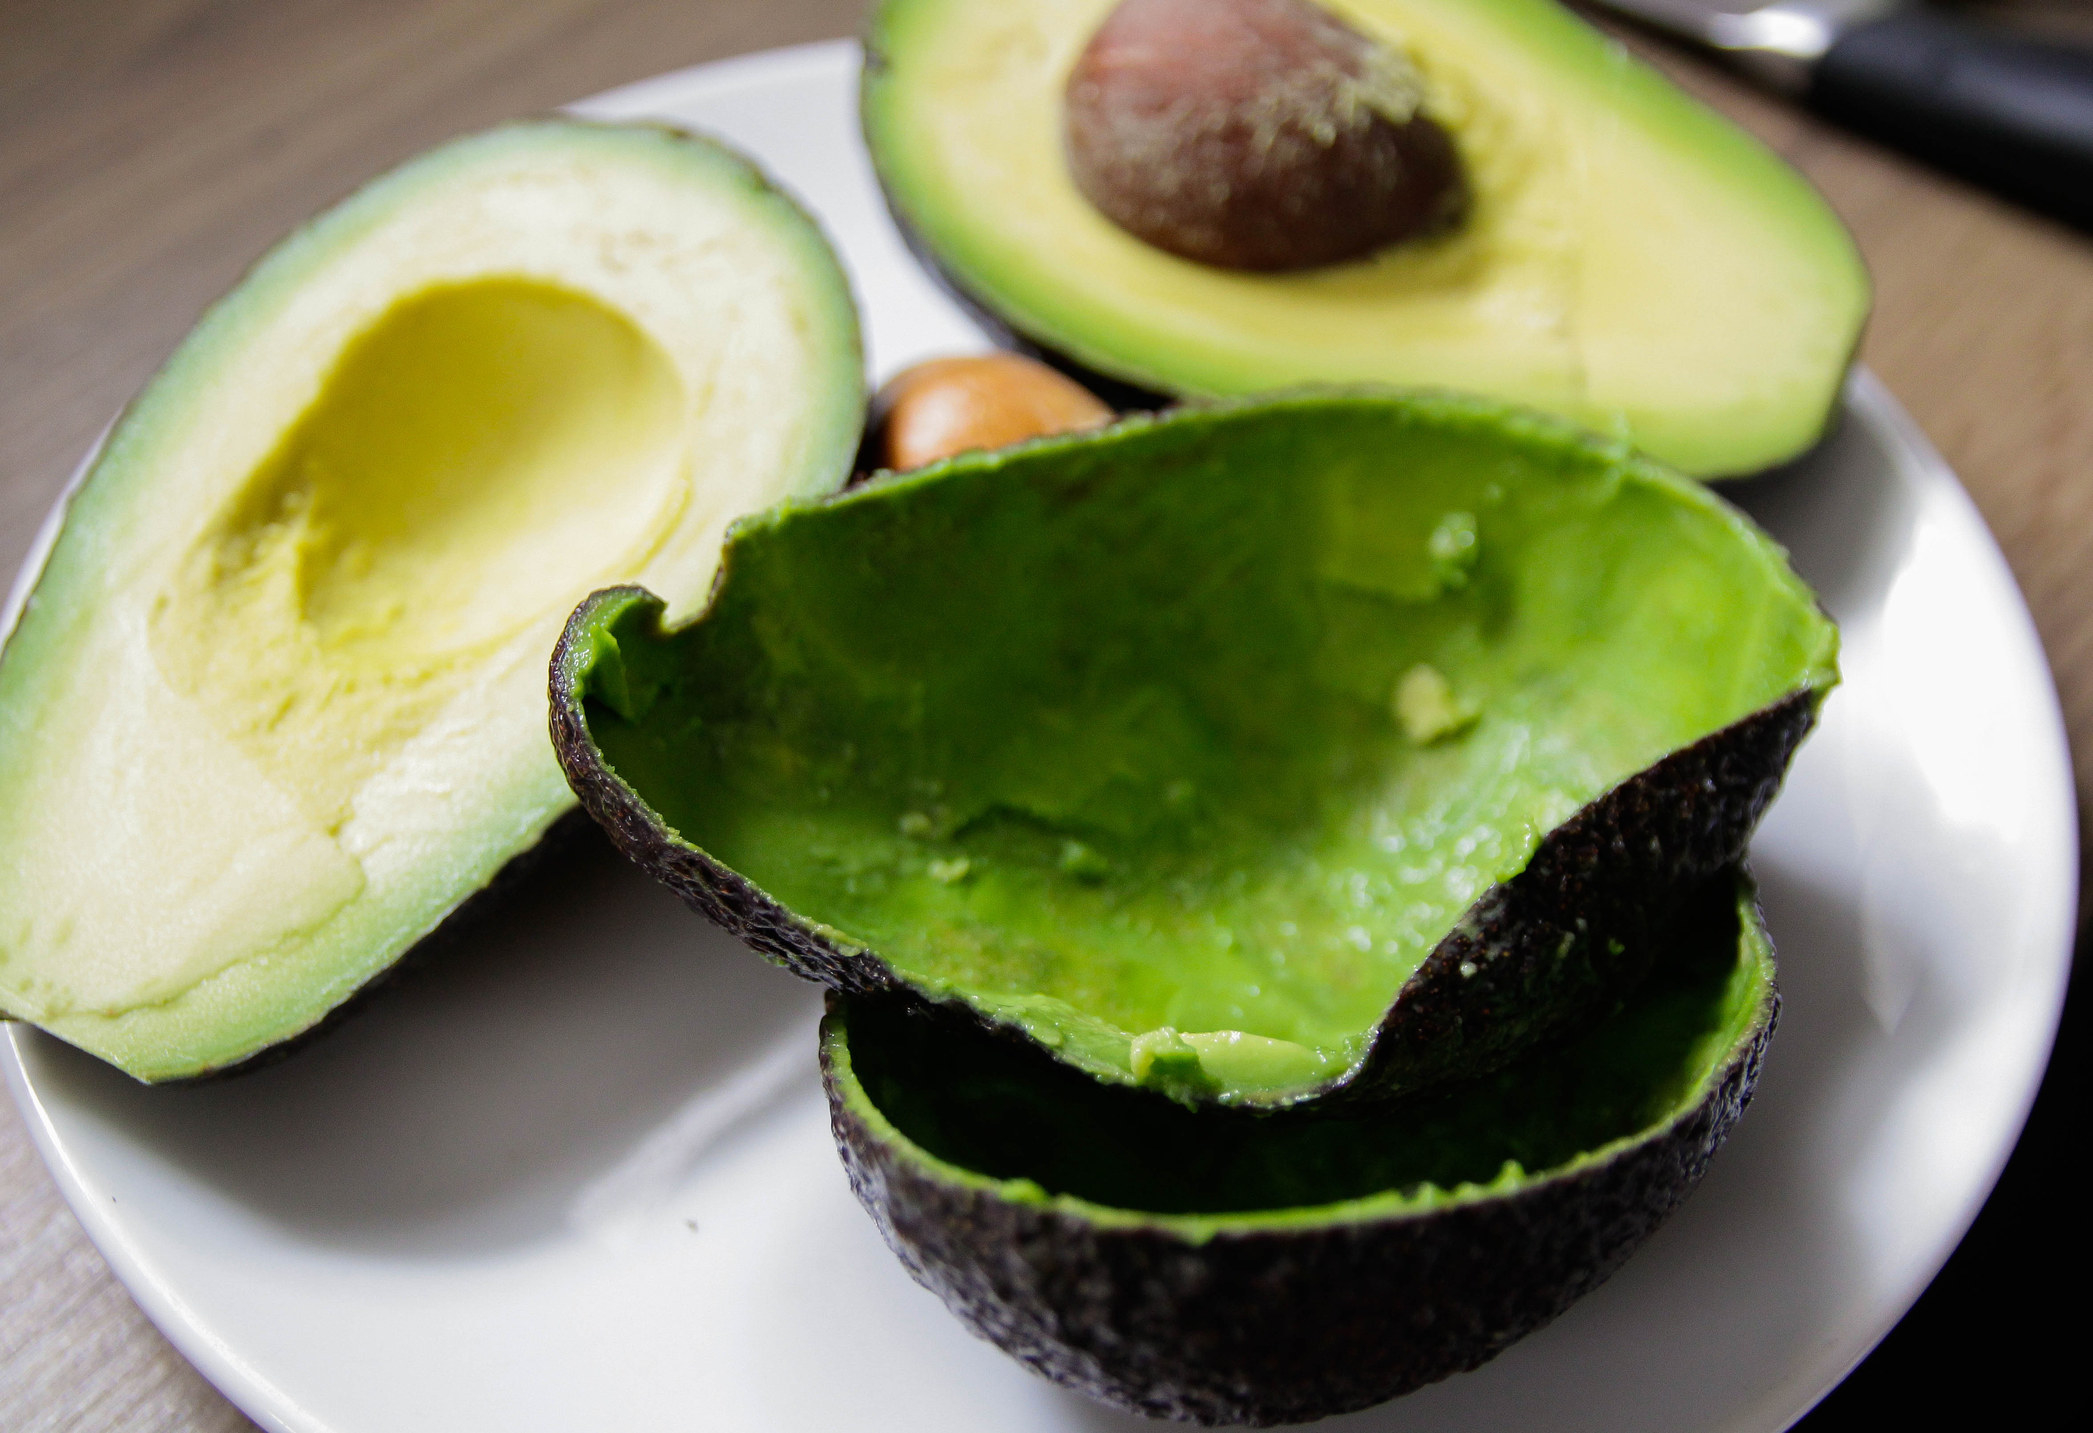 A peeled avocado